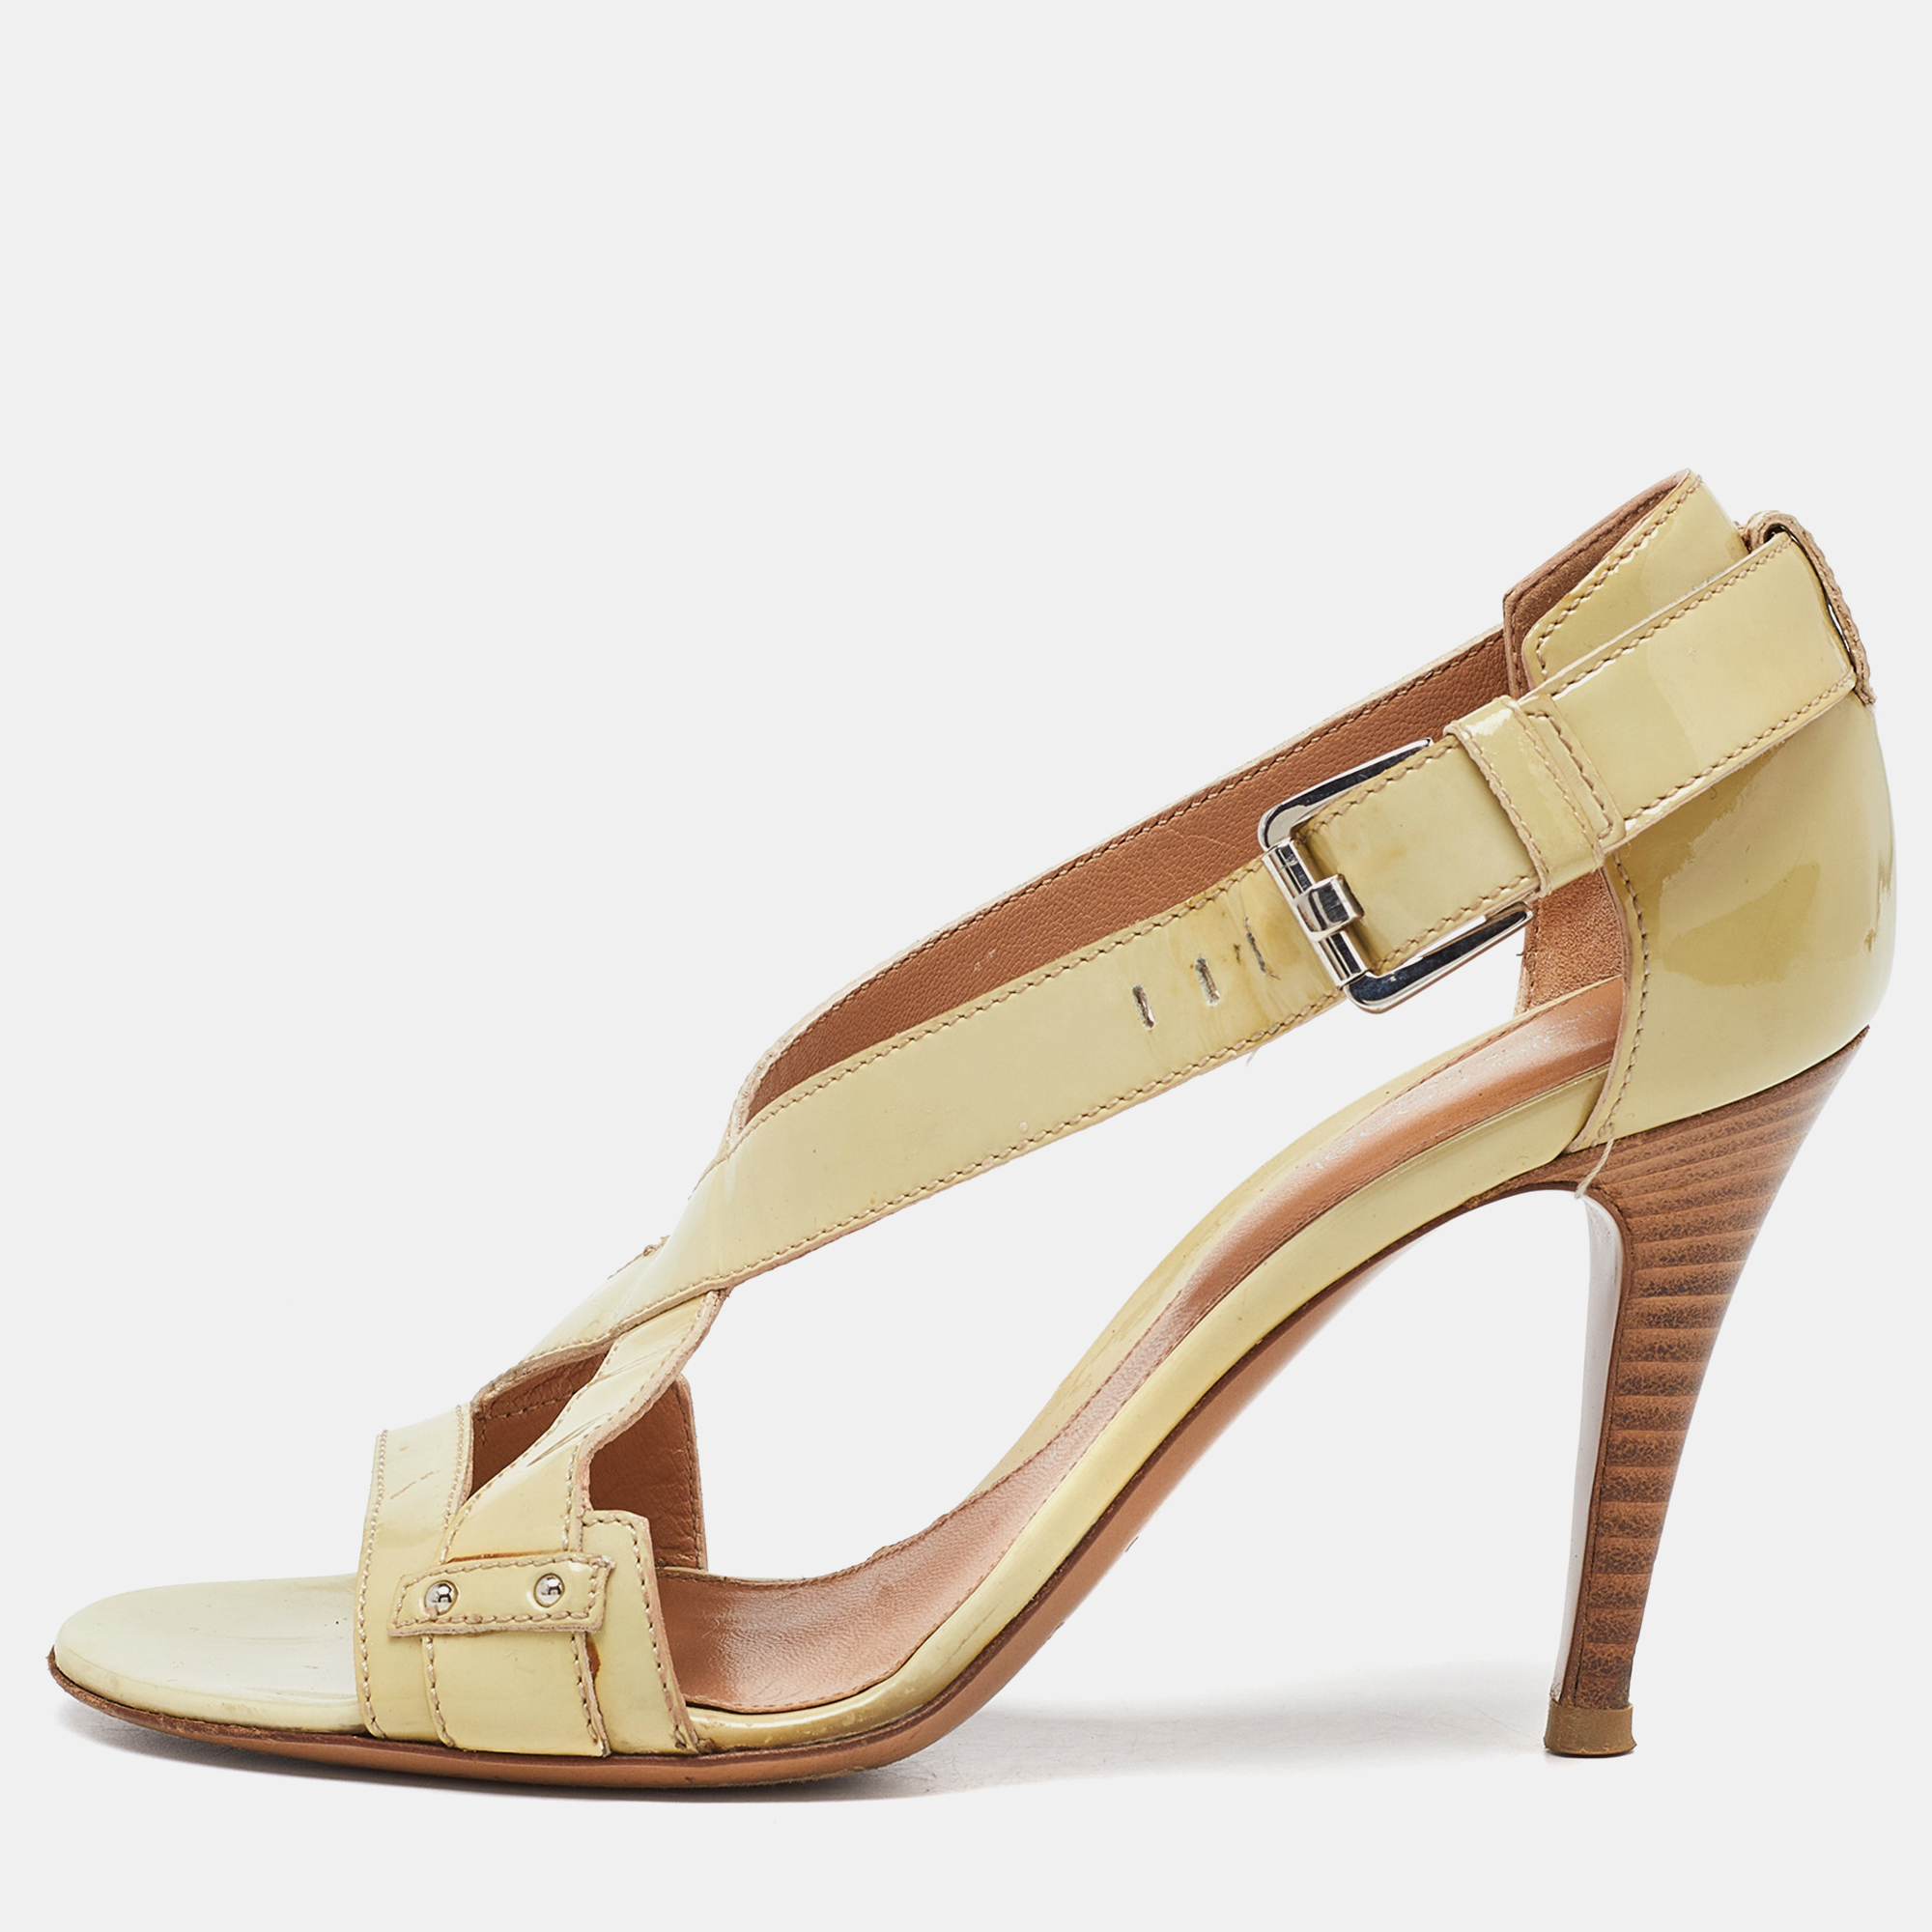 Sergio rossi beige patent leather strappy sandals size 37